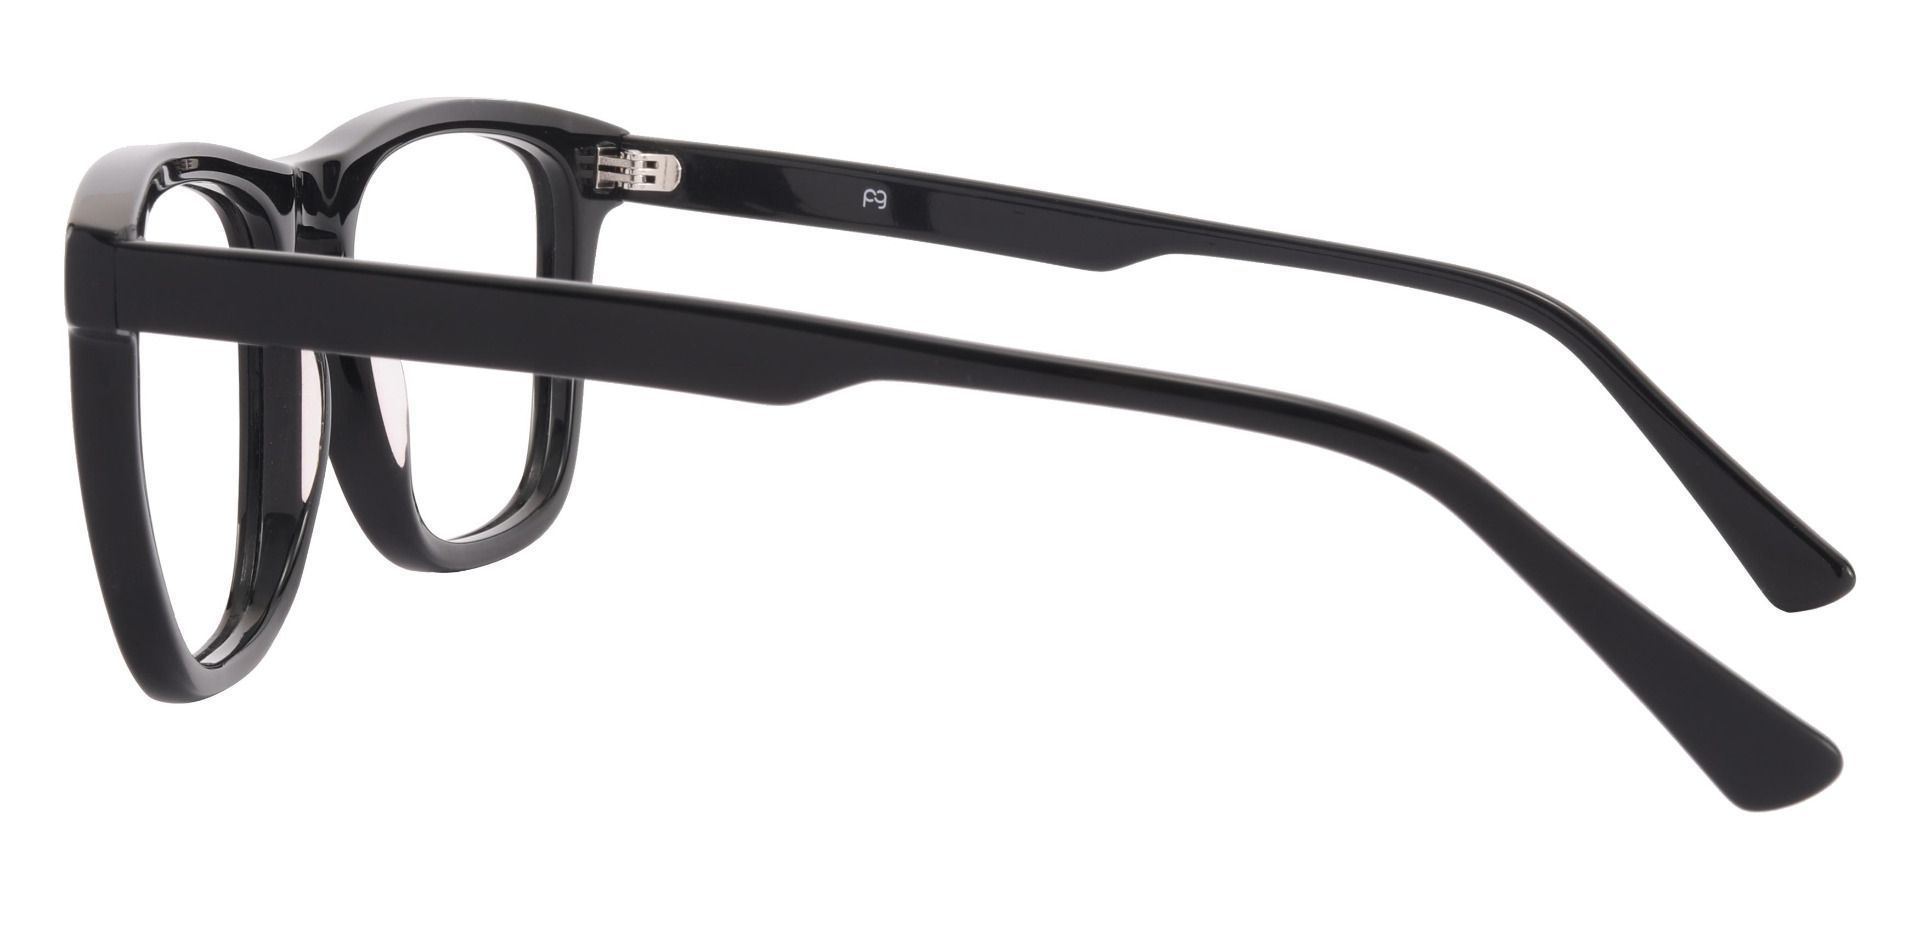 Reno Square Progressive Glasses - Black